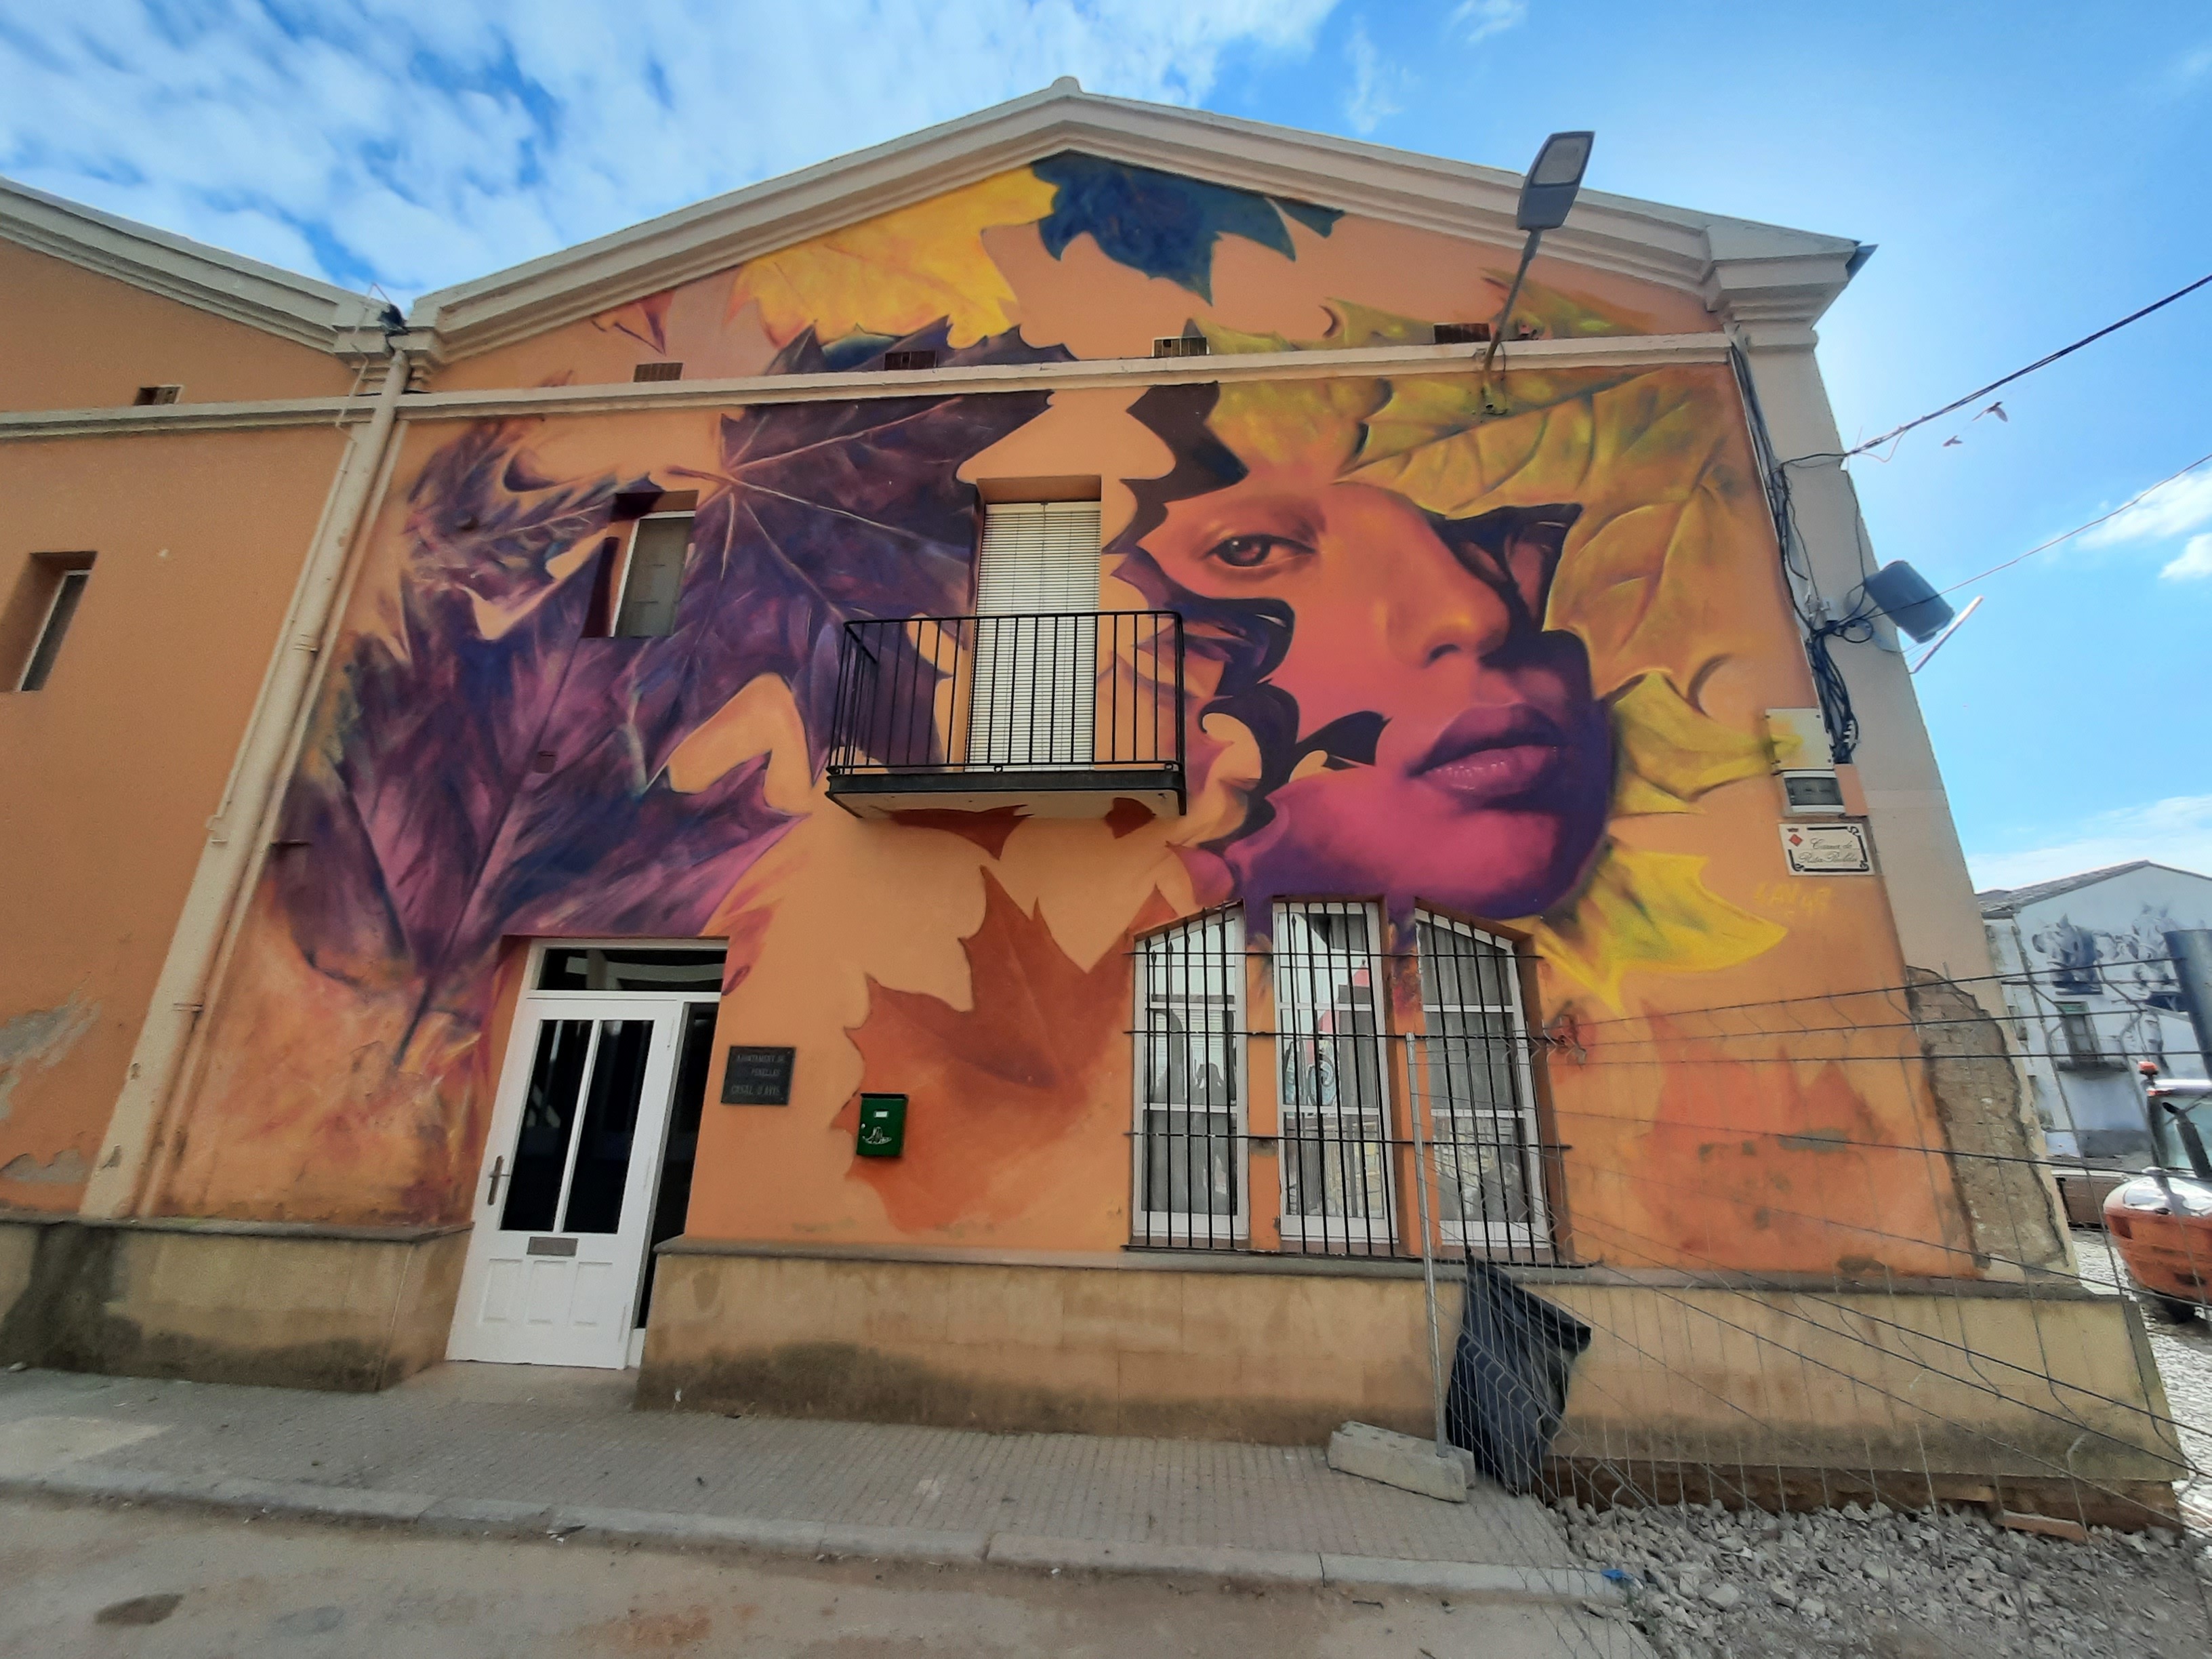 Graffiti 6982  captured by Mephisroth in Penelles Spain